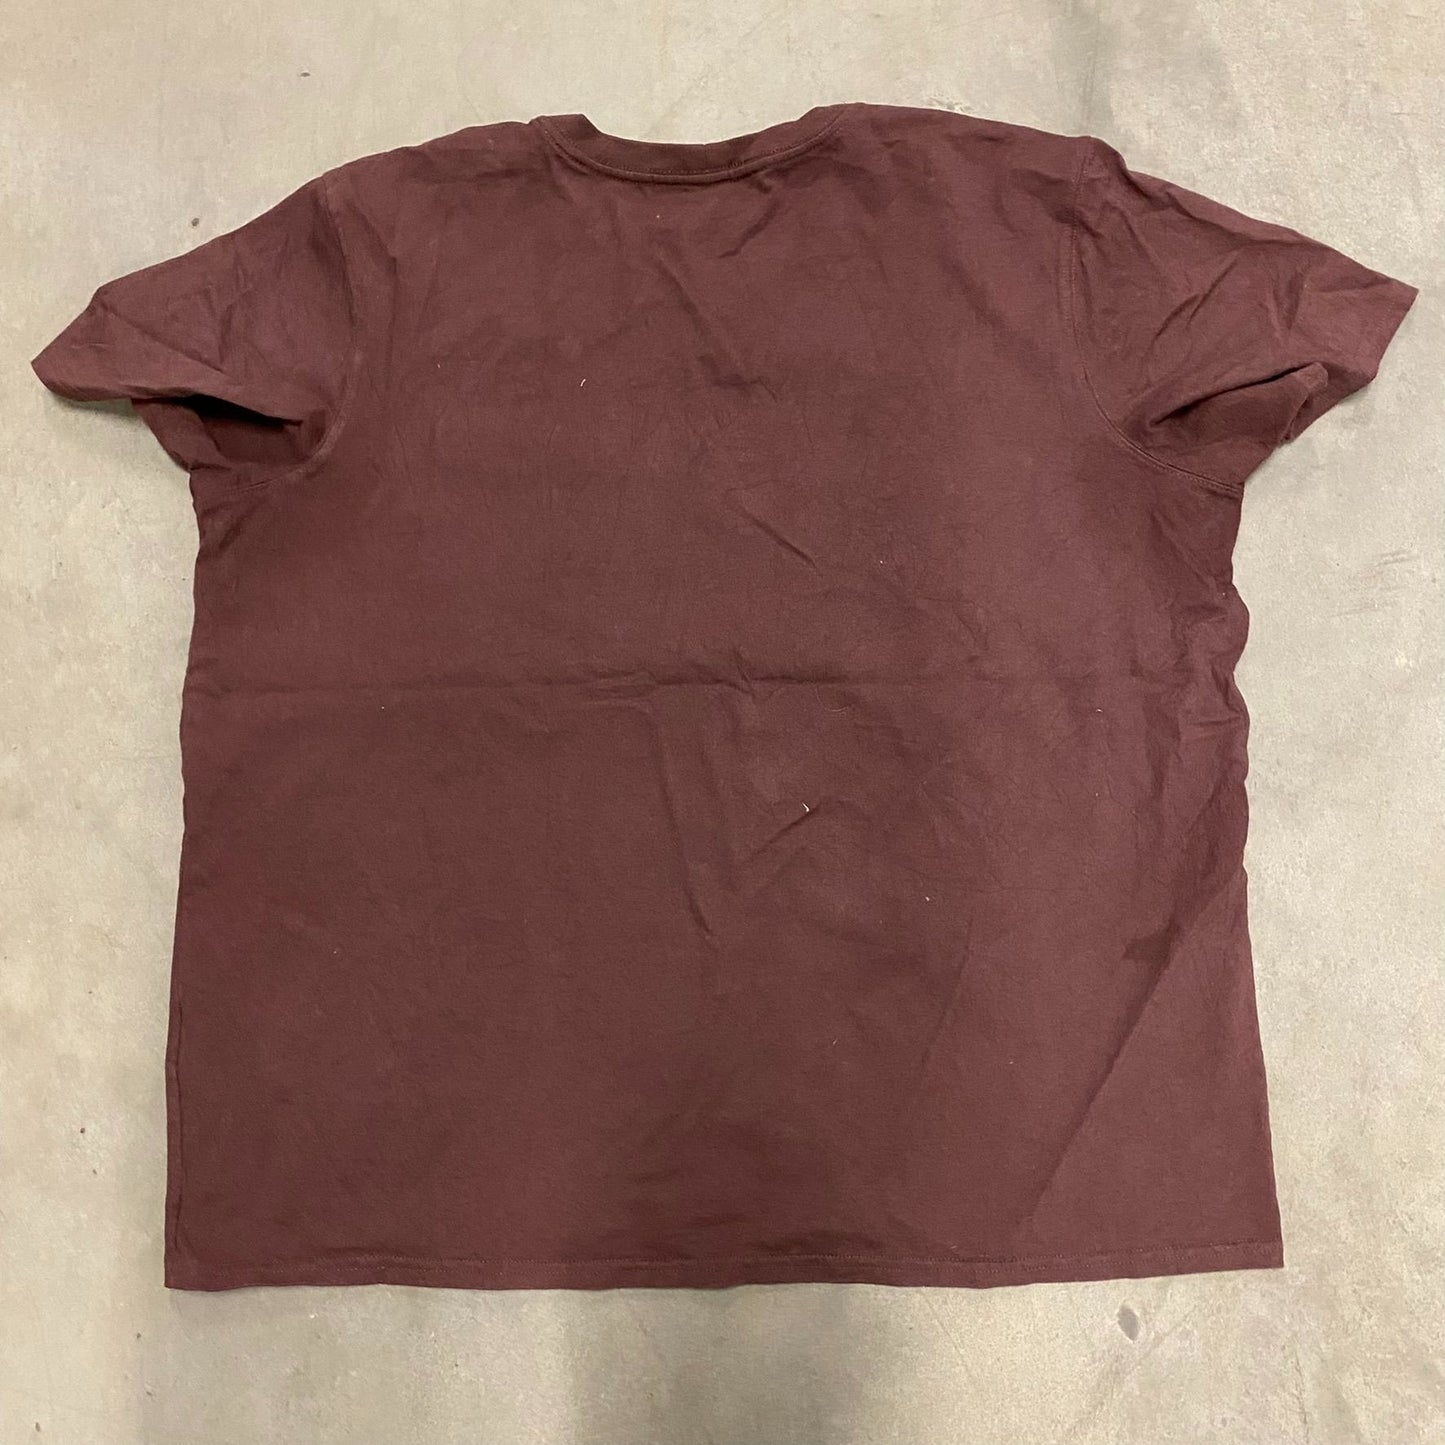 Carhartt Maroon Burgundy T-Shirt